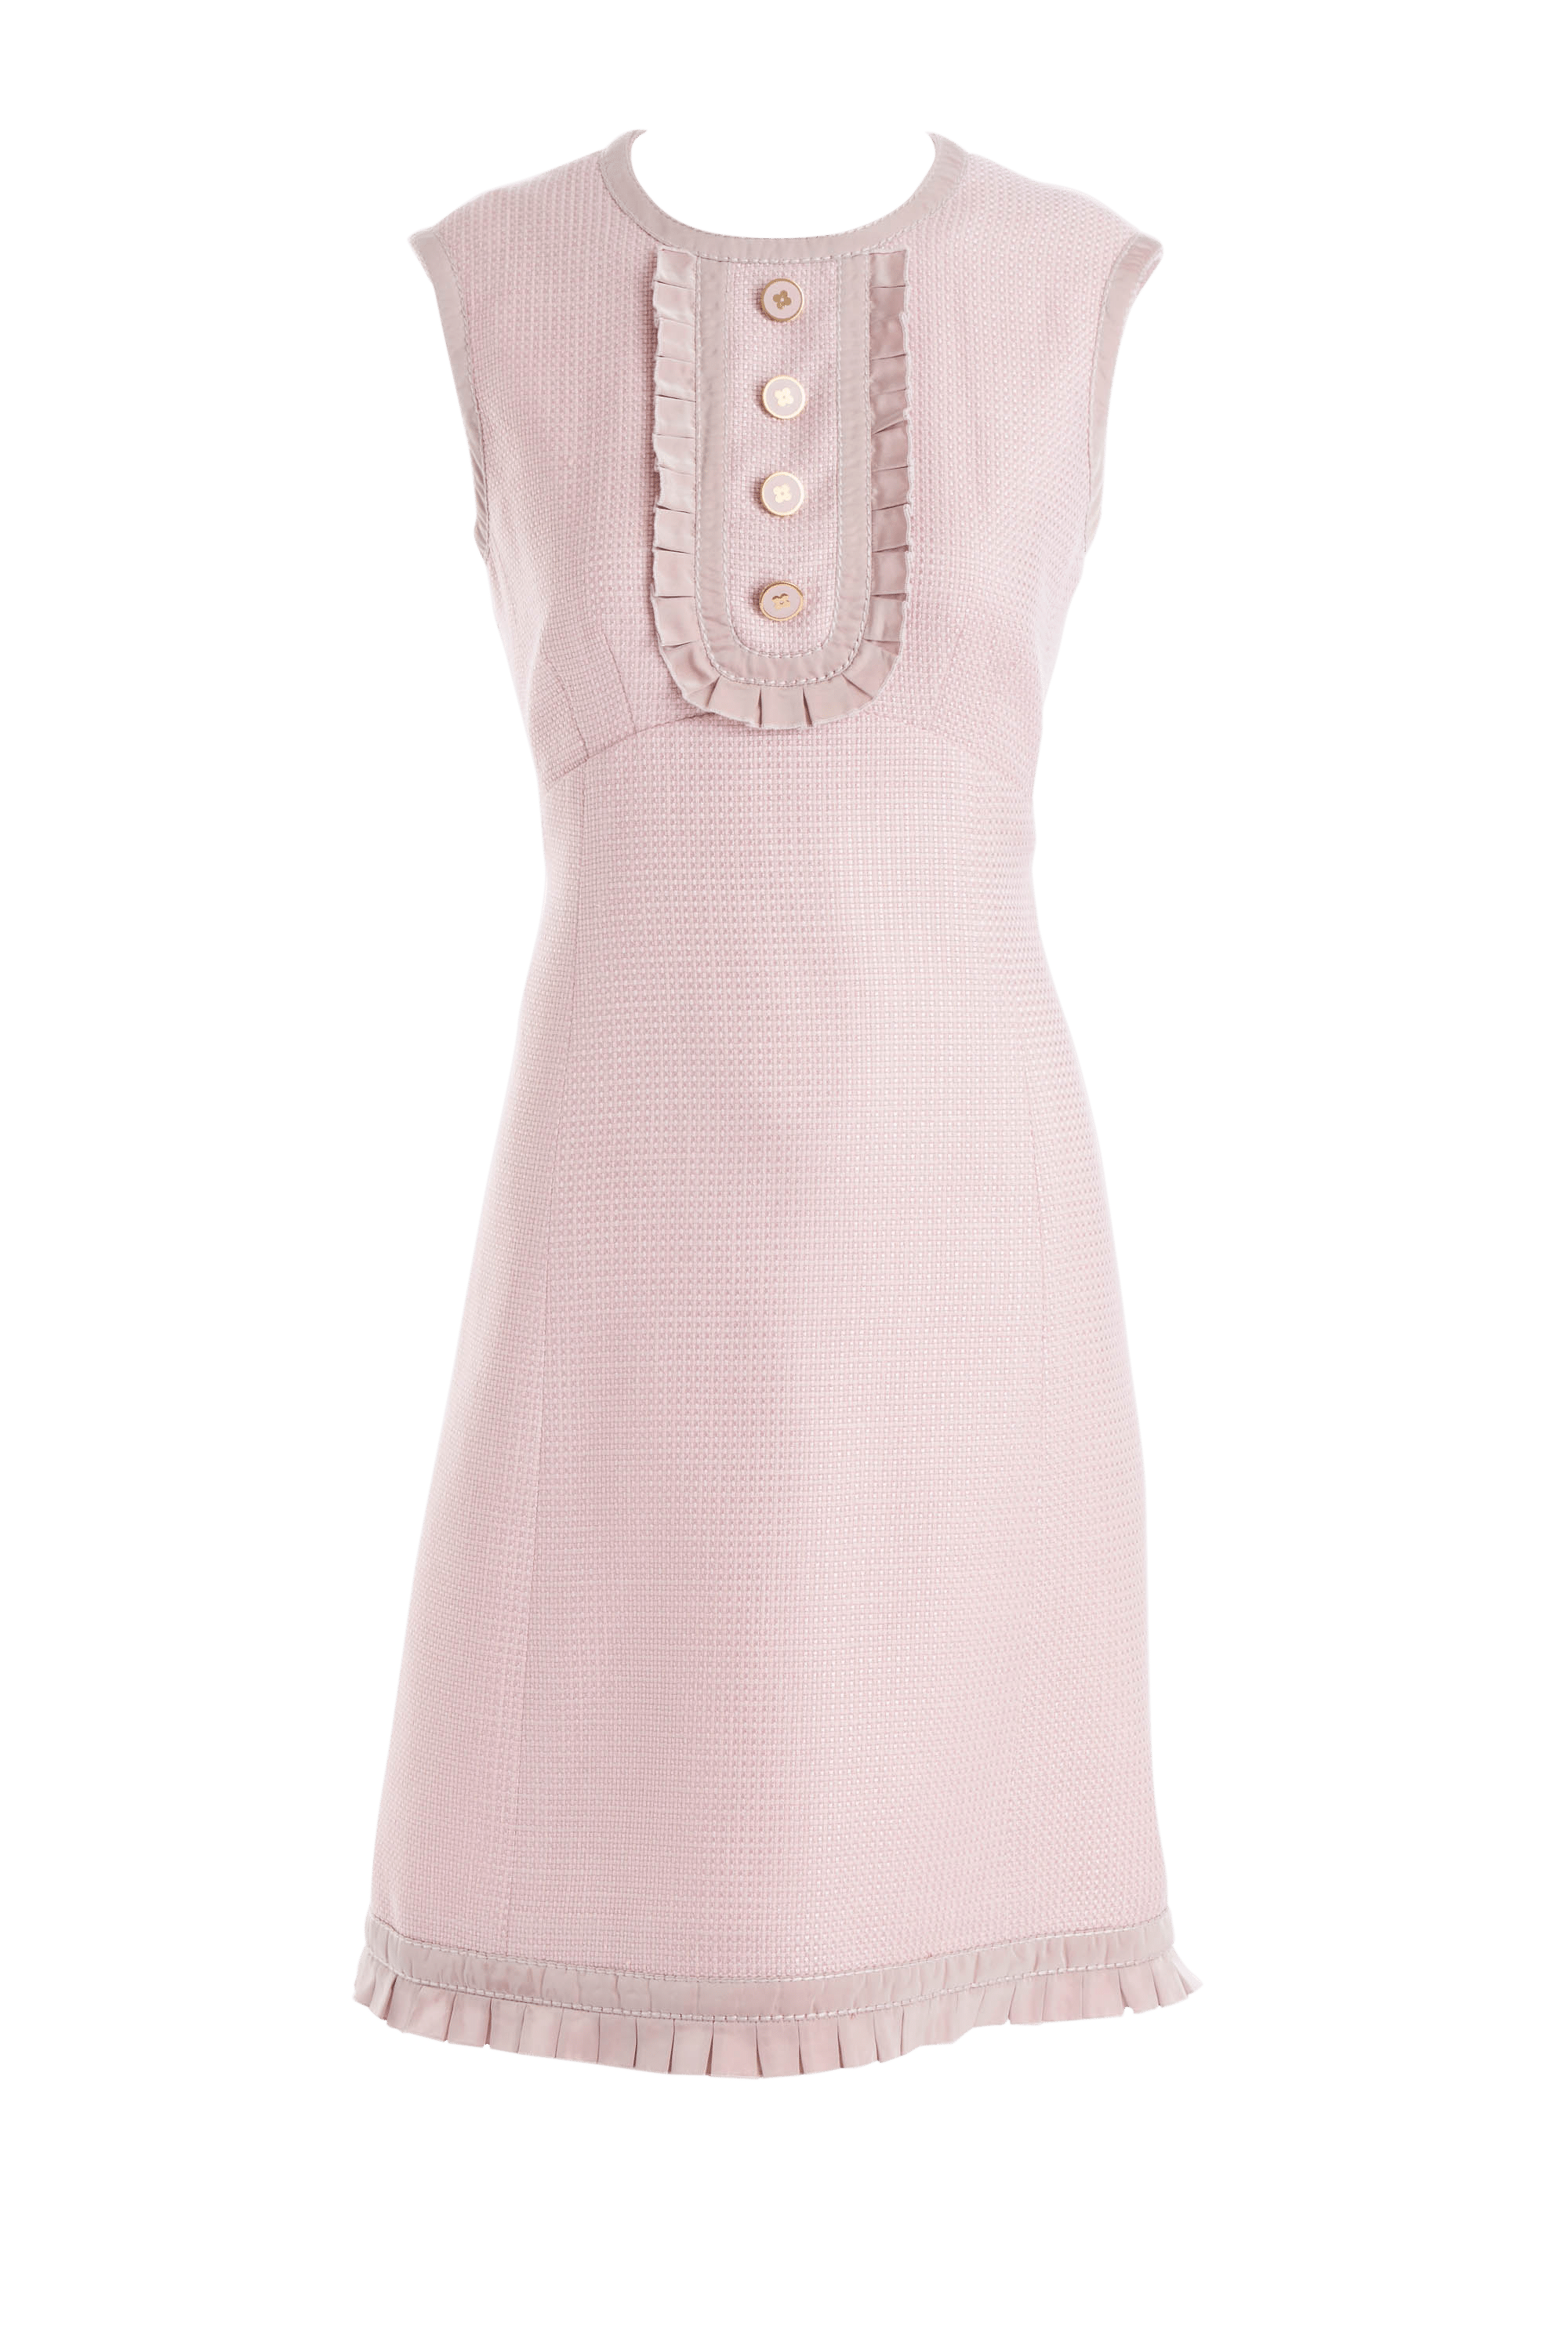 Louis Vuitton Pink A Line Sleeveless Dress Size 40 - Foxy Couture Carmel